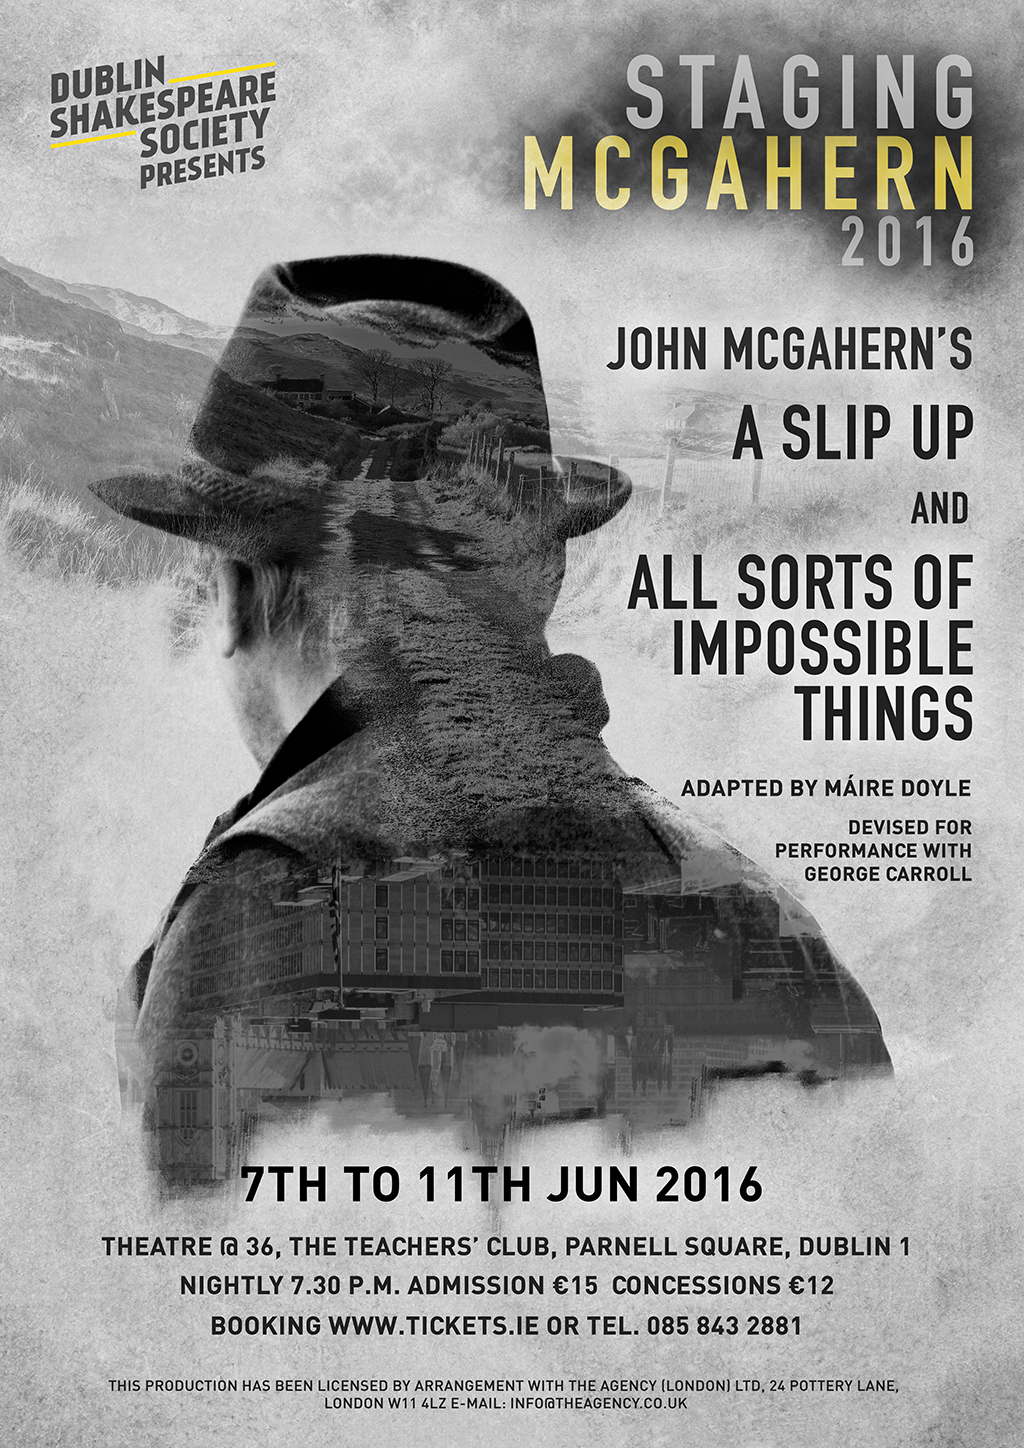 Dublin Shakespeare Society Staging McGahern 2016